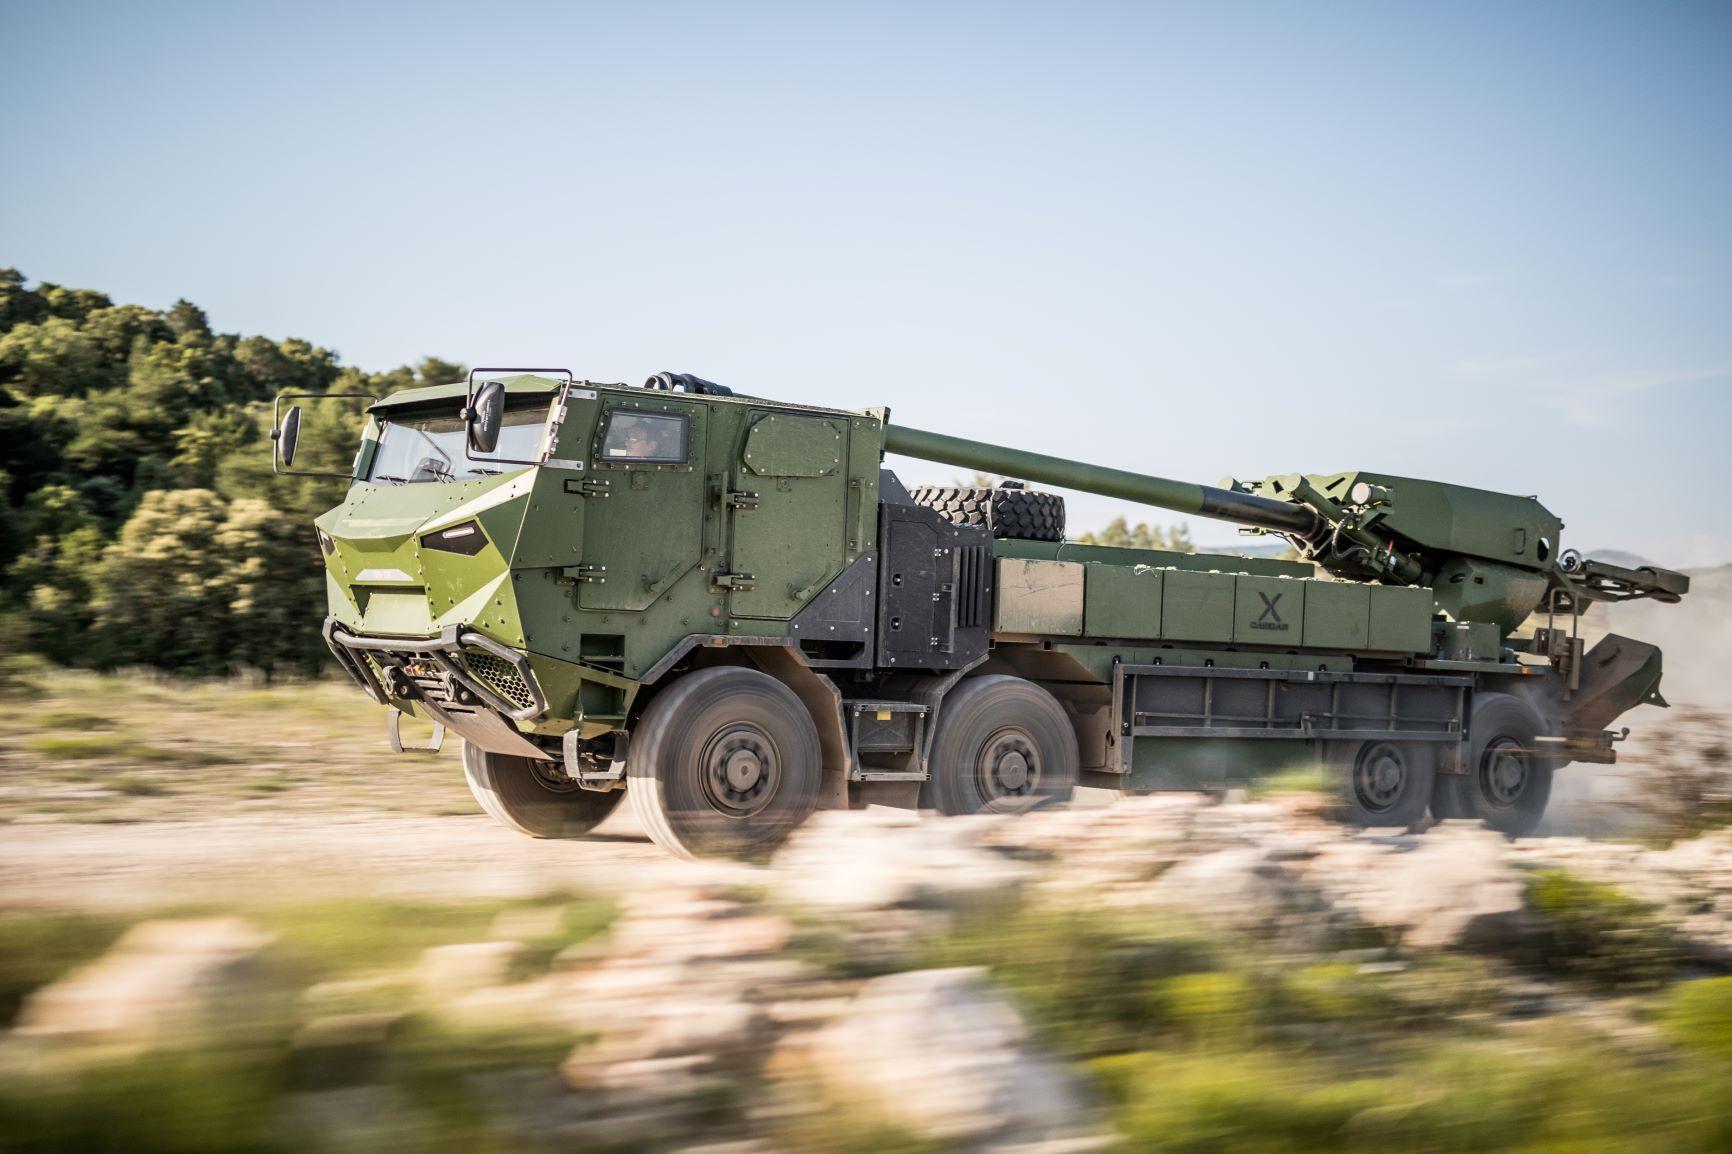 European artillery specialist, Nexter has received a major order for 52 CAESAR self-propelled artillery guns in the eight-wheel drive (8x8) version.